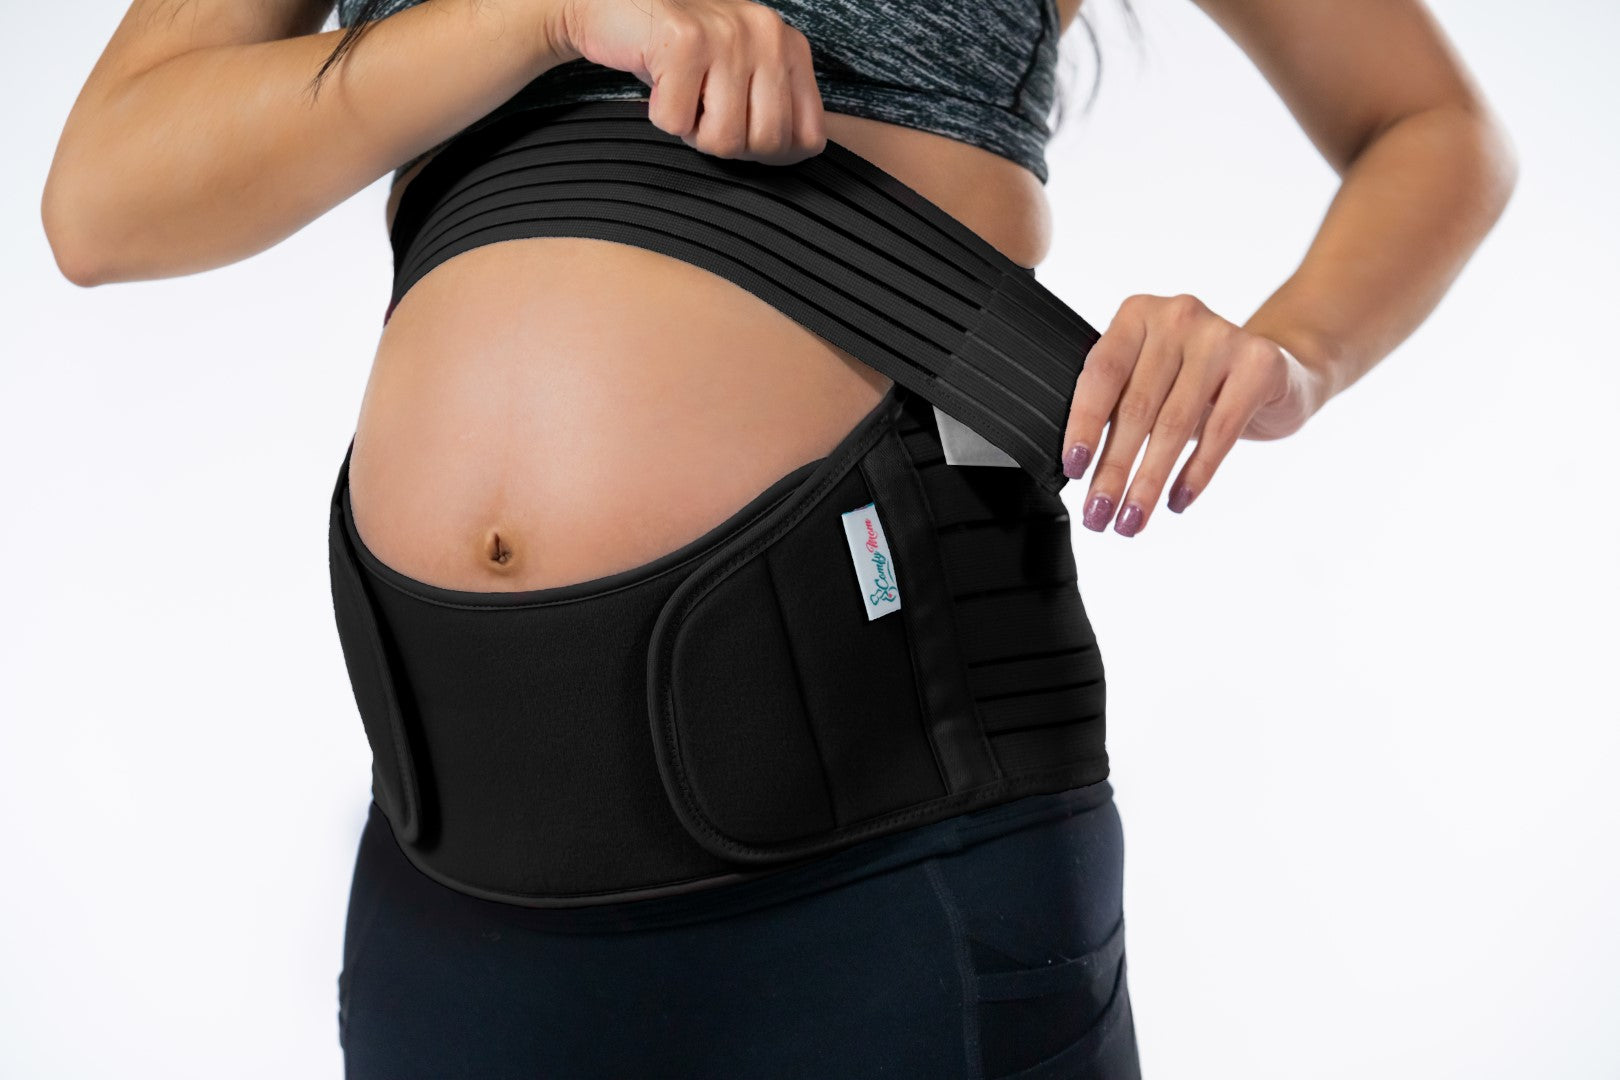 Comfy Mom Pregnancy Belt for Back Pain and Pelvic Pressure